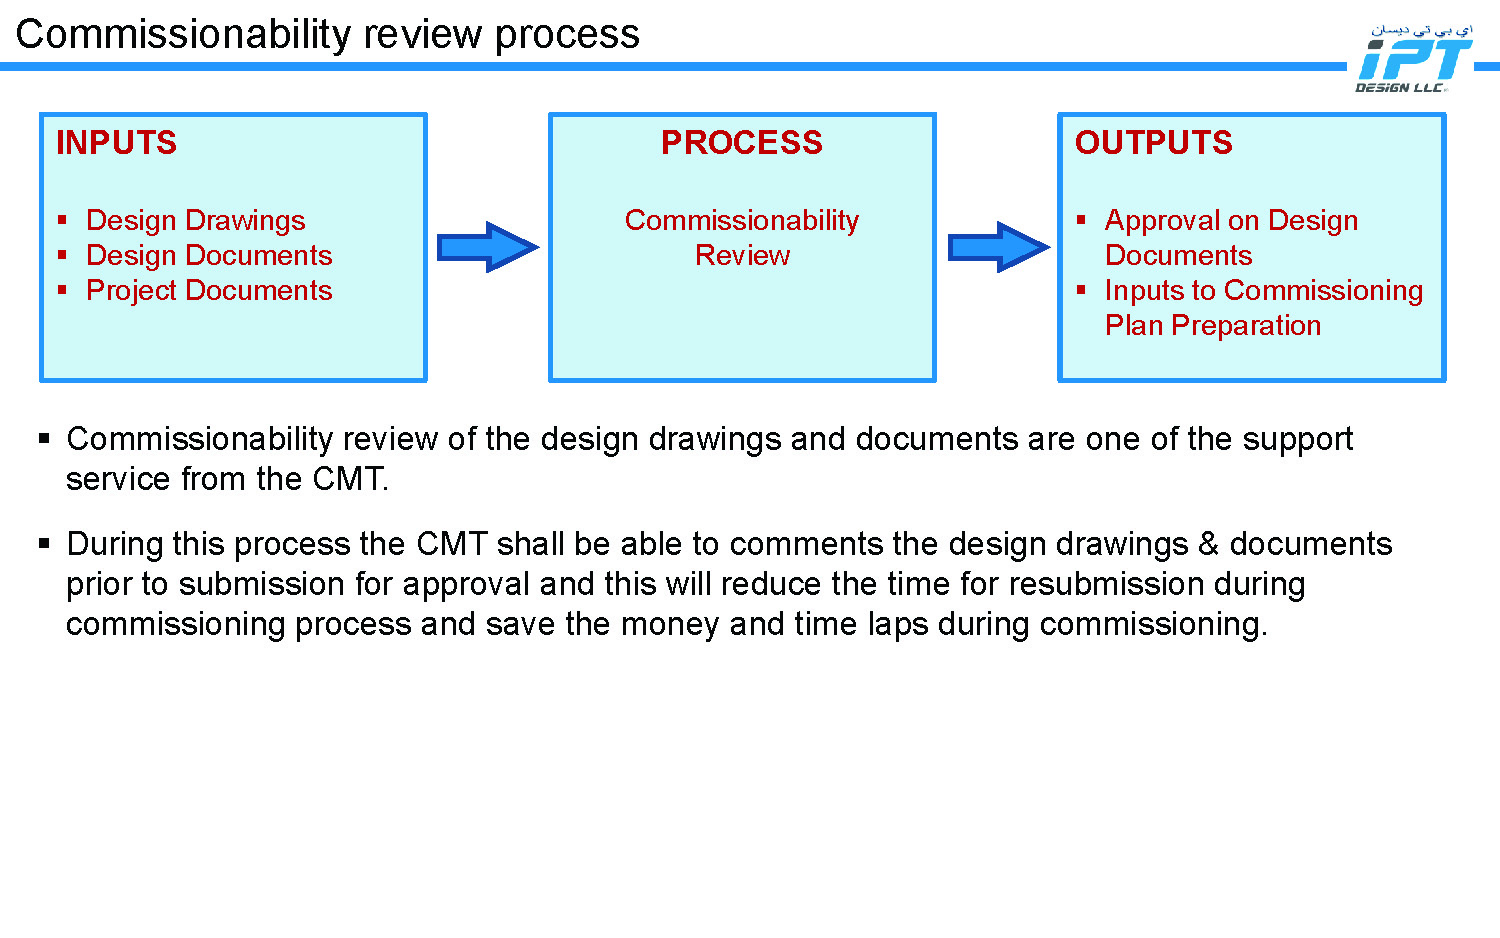 IPT Design LLC - Commissioning Management Process_Page_05.jpg